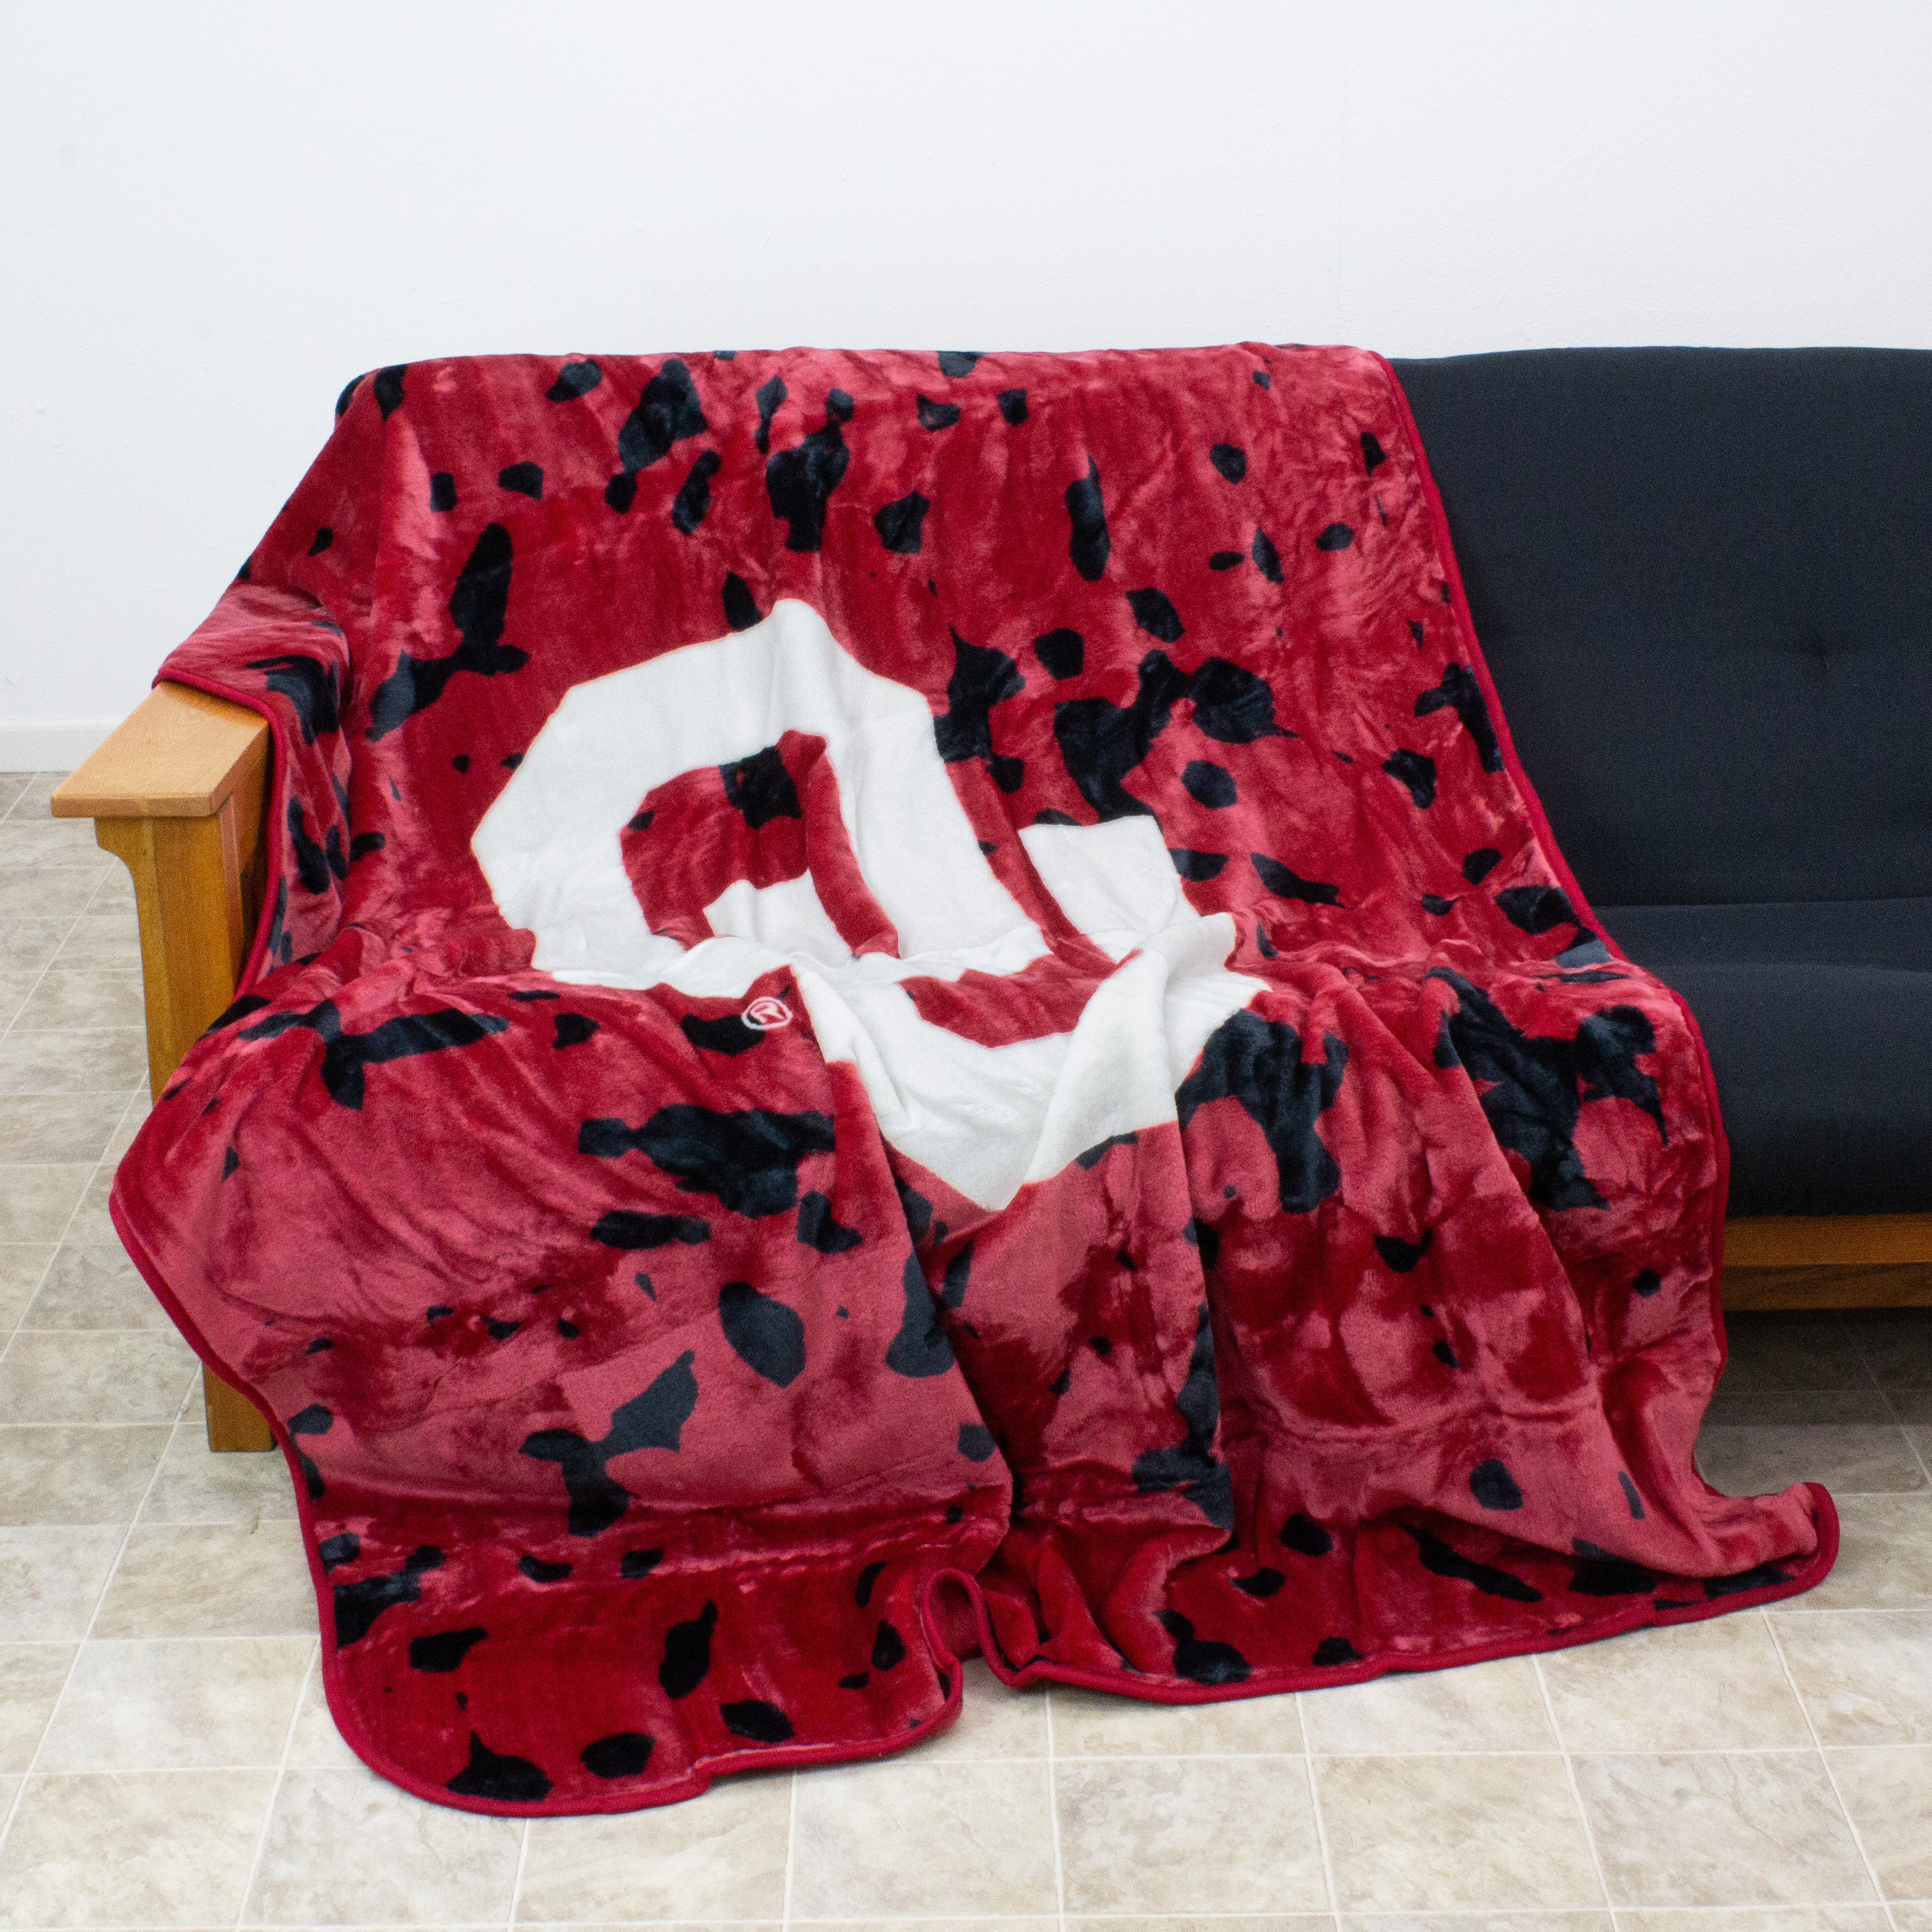 College Covers Oklahoma Sooners Huge Raschel Throw Blanket, Bedspread, 86" x 63" - image 2 of 5